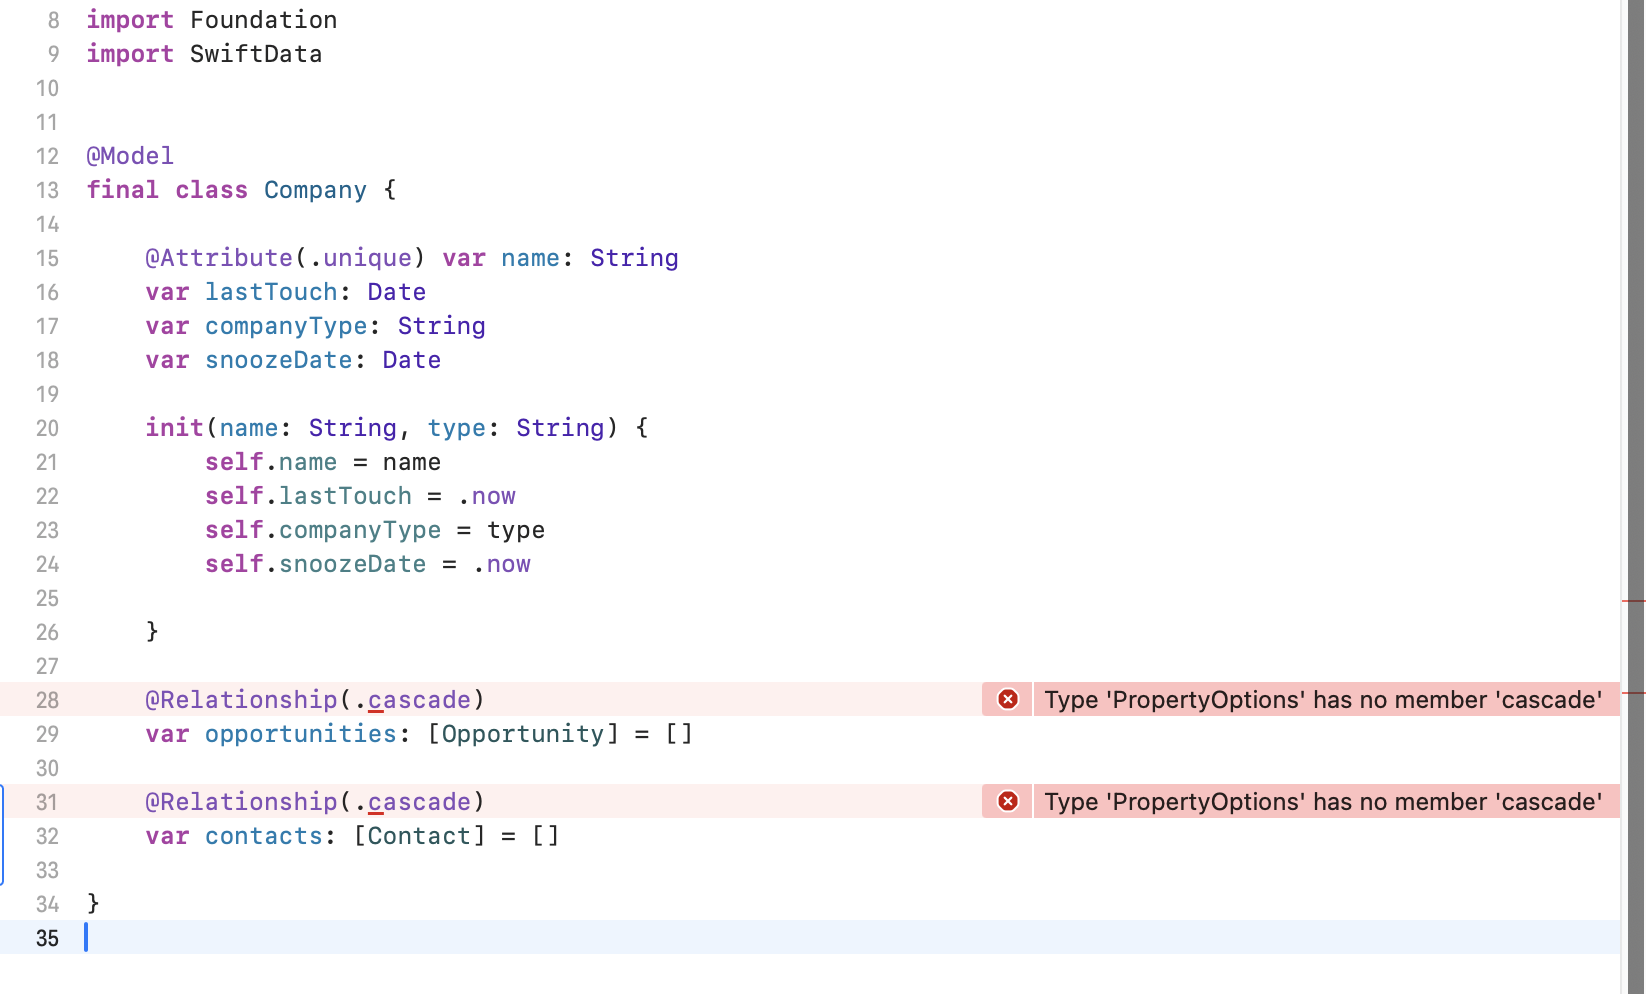 Xcode error: Type 'PropertyOptions' has no member 'cascade'